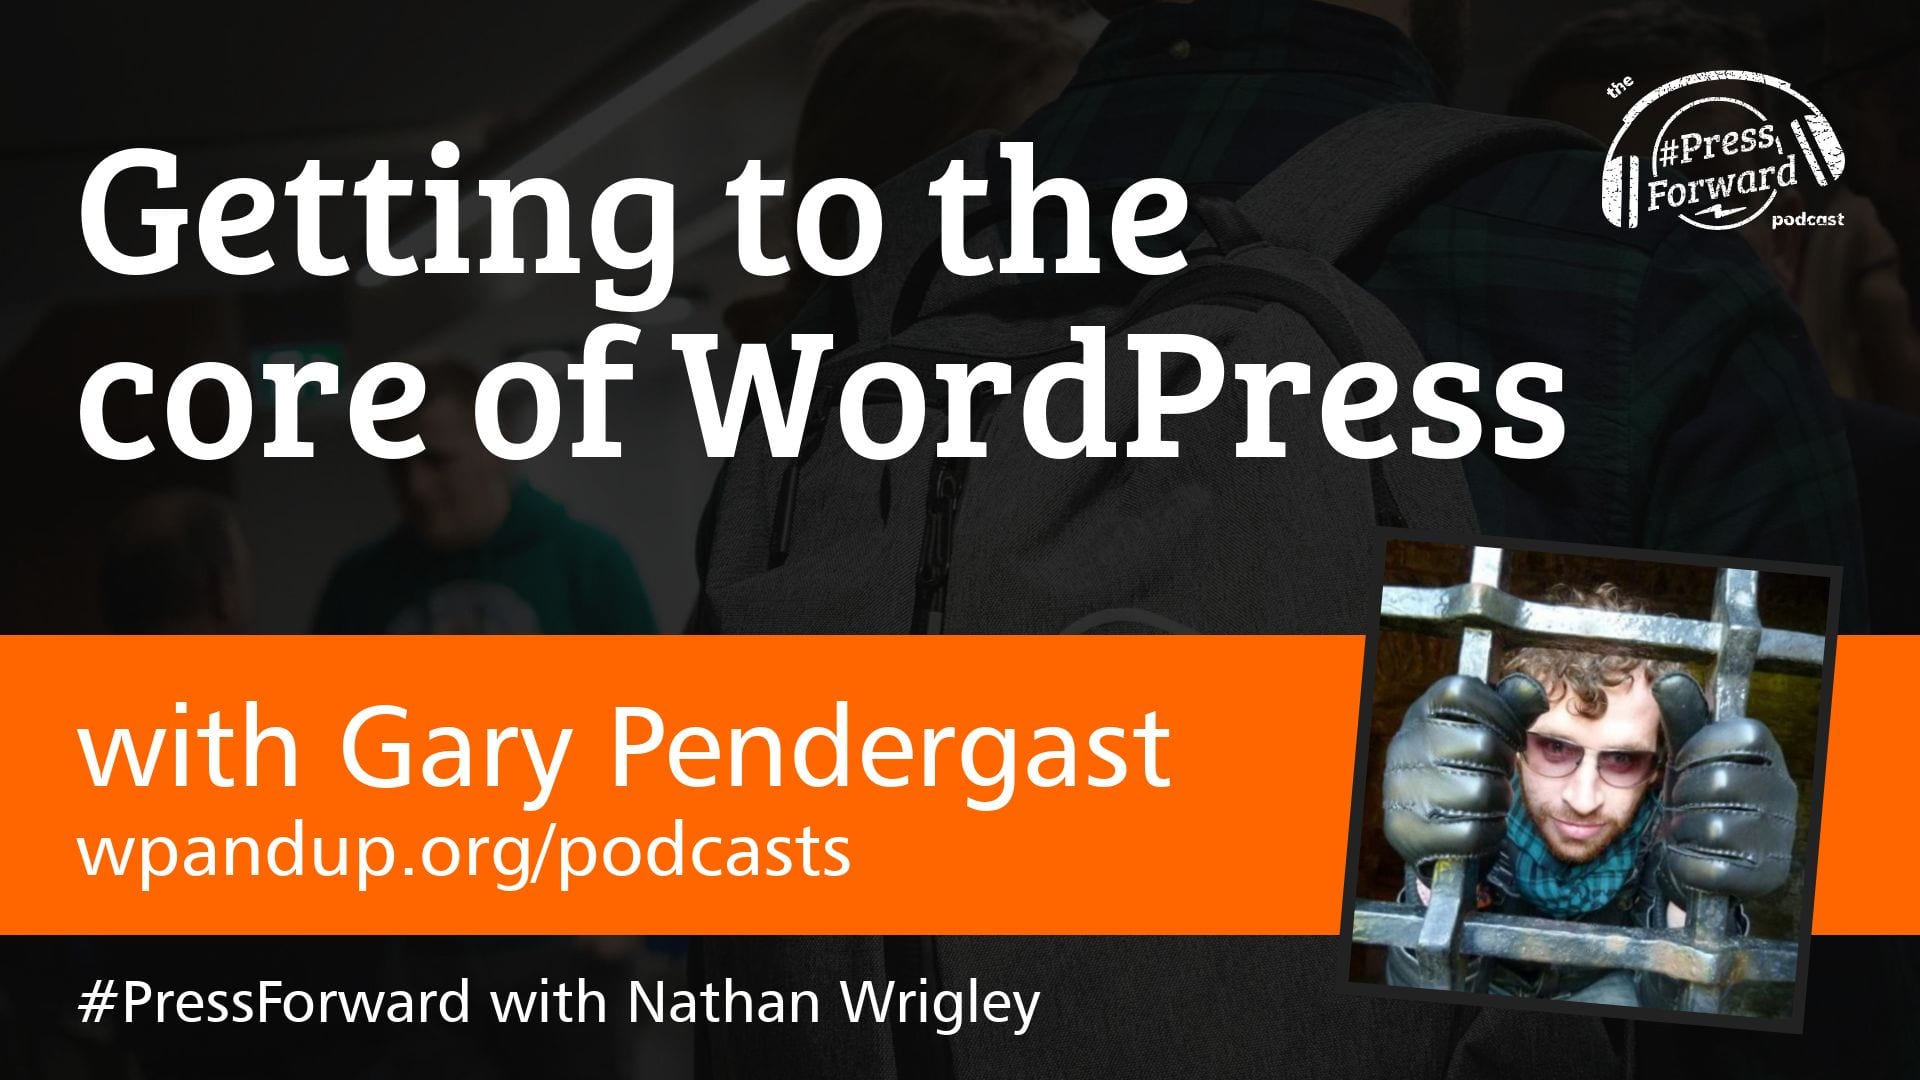 Getting to the core of WordPress - #021